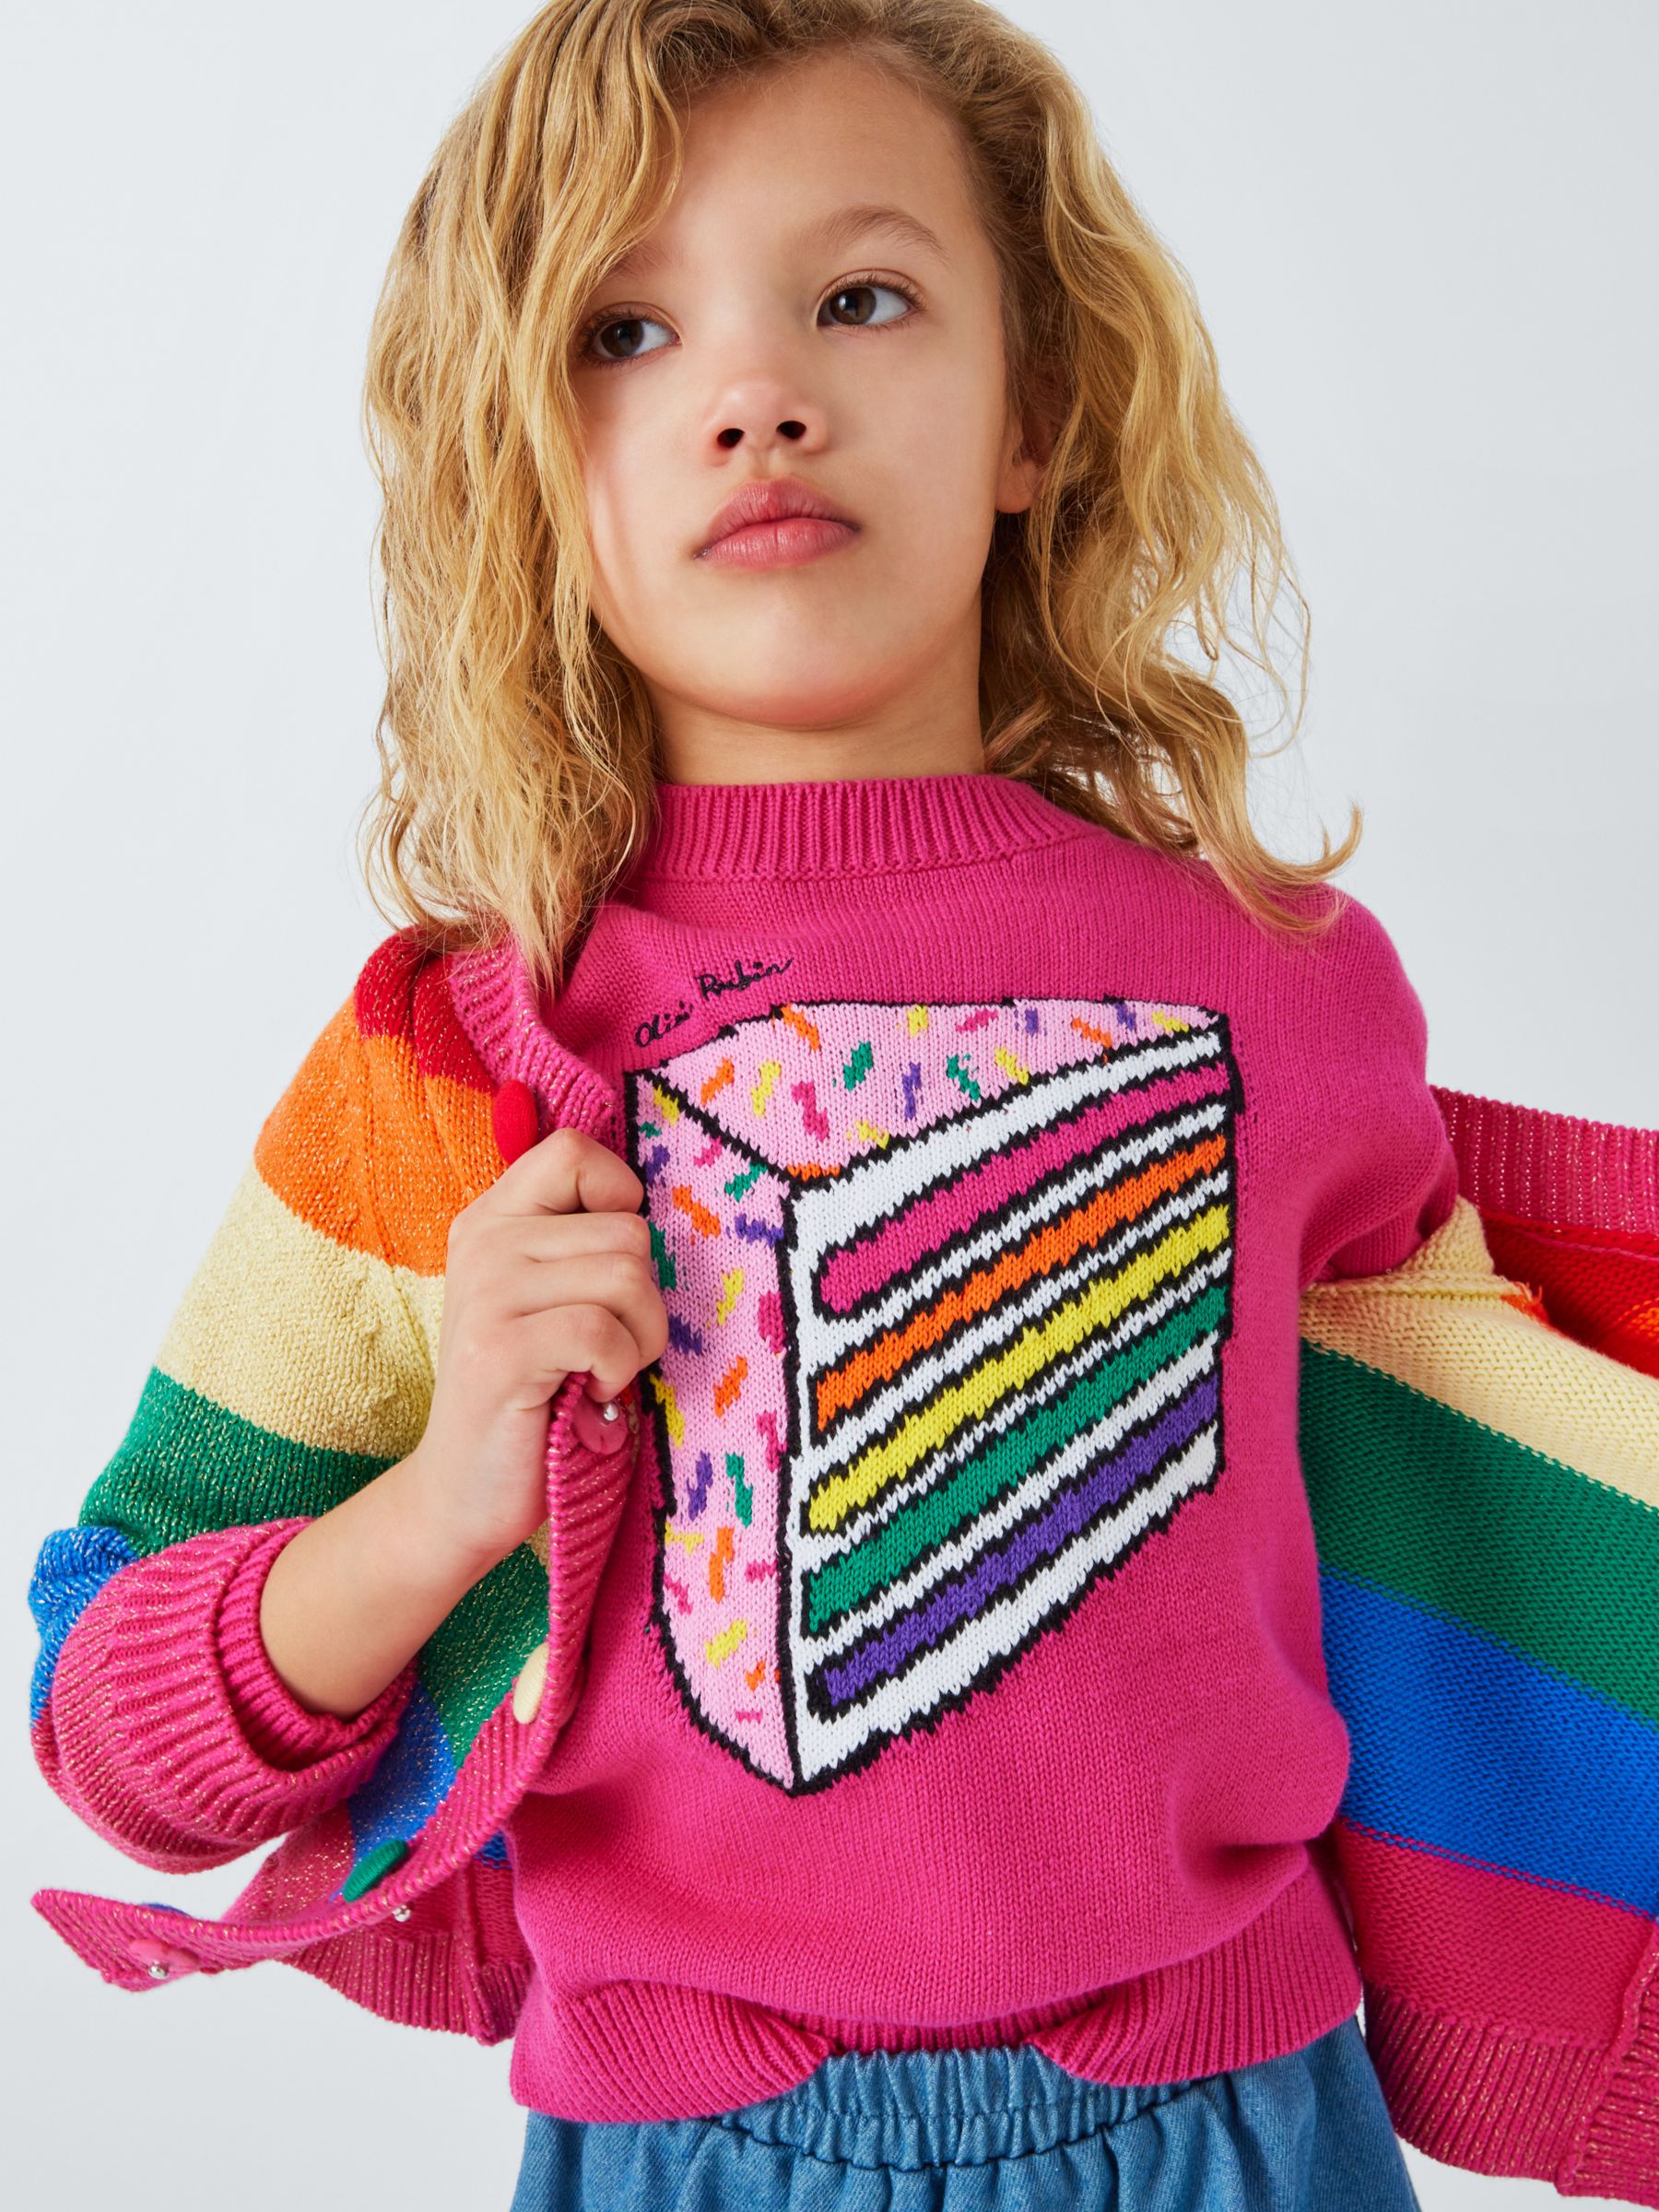 Olivia Rubin Kids' Aria Rainbow Cake Crew Neck Jumper, Hot Pink, 8-9 years